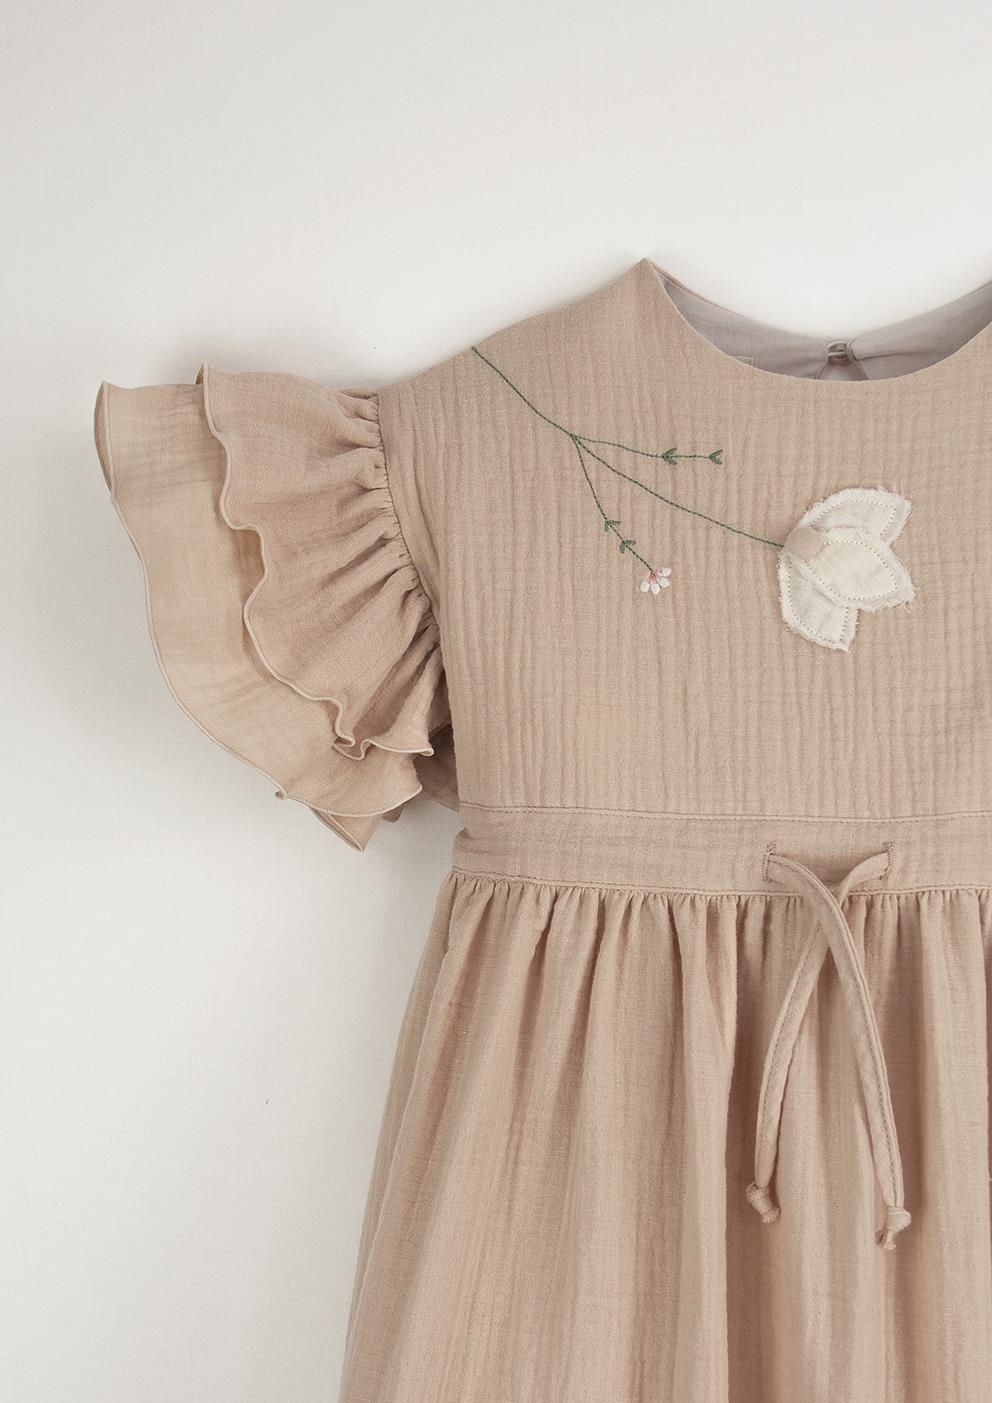 Mod.34.2 Pink organic dress with embroidered yoke and appliqué | SS23 Mod.34.2 Pink organic dress with embroidered yoke and appliqué